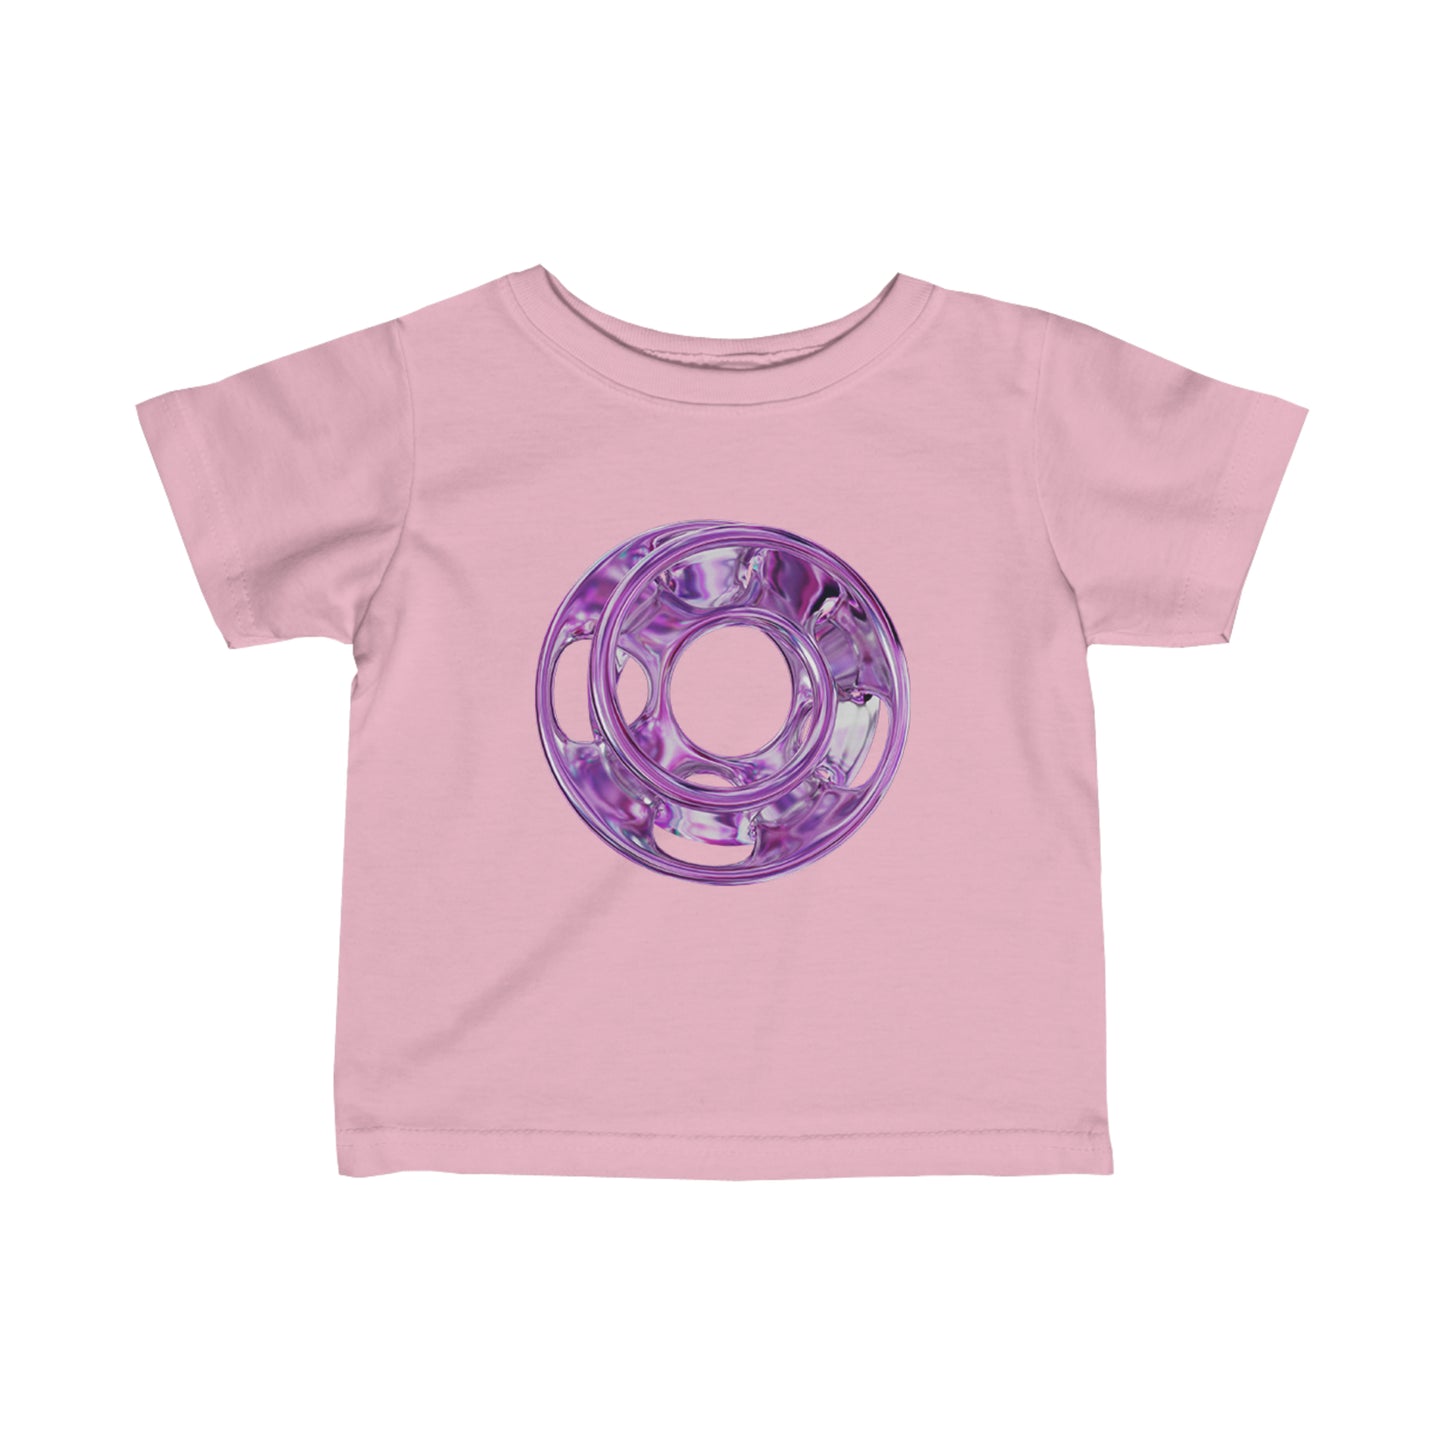 Delirium Round Infant T-Shirt